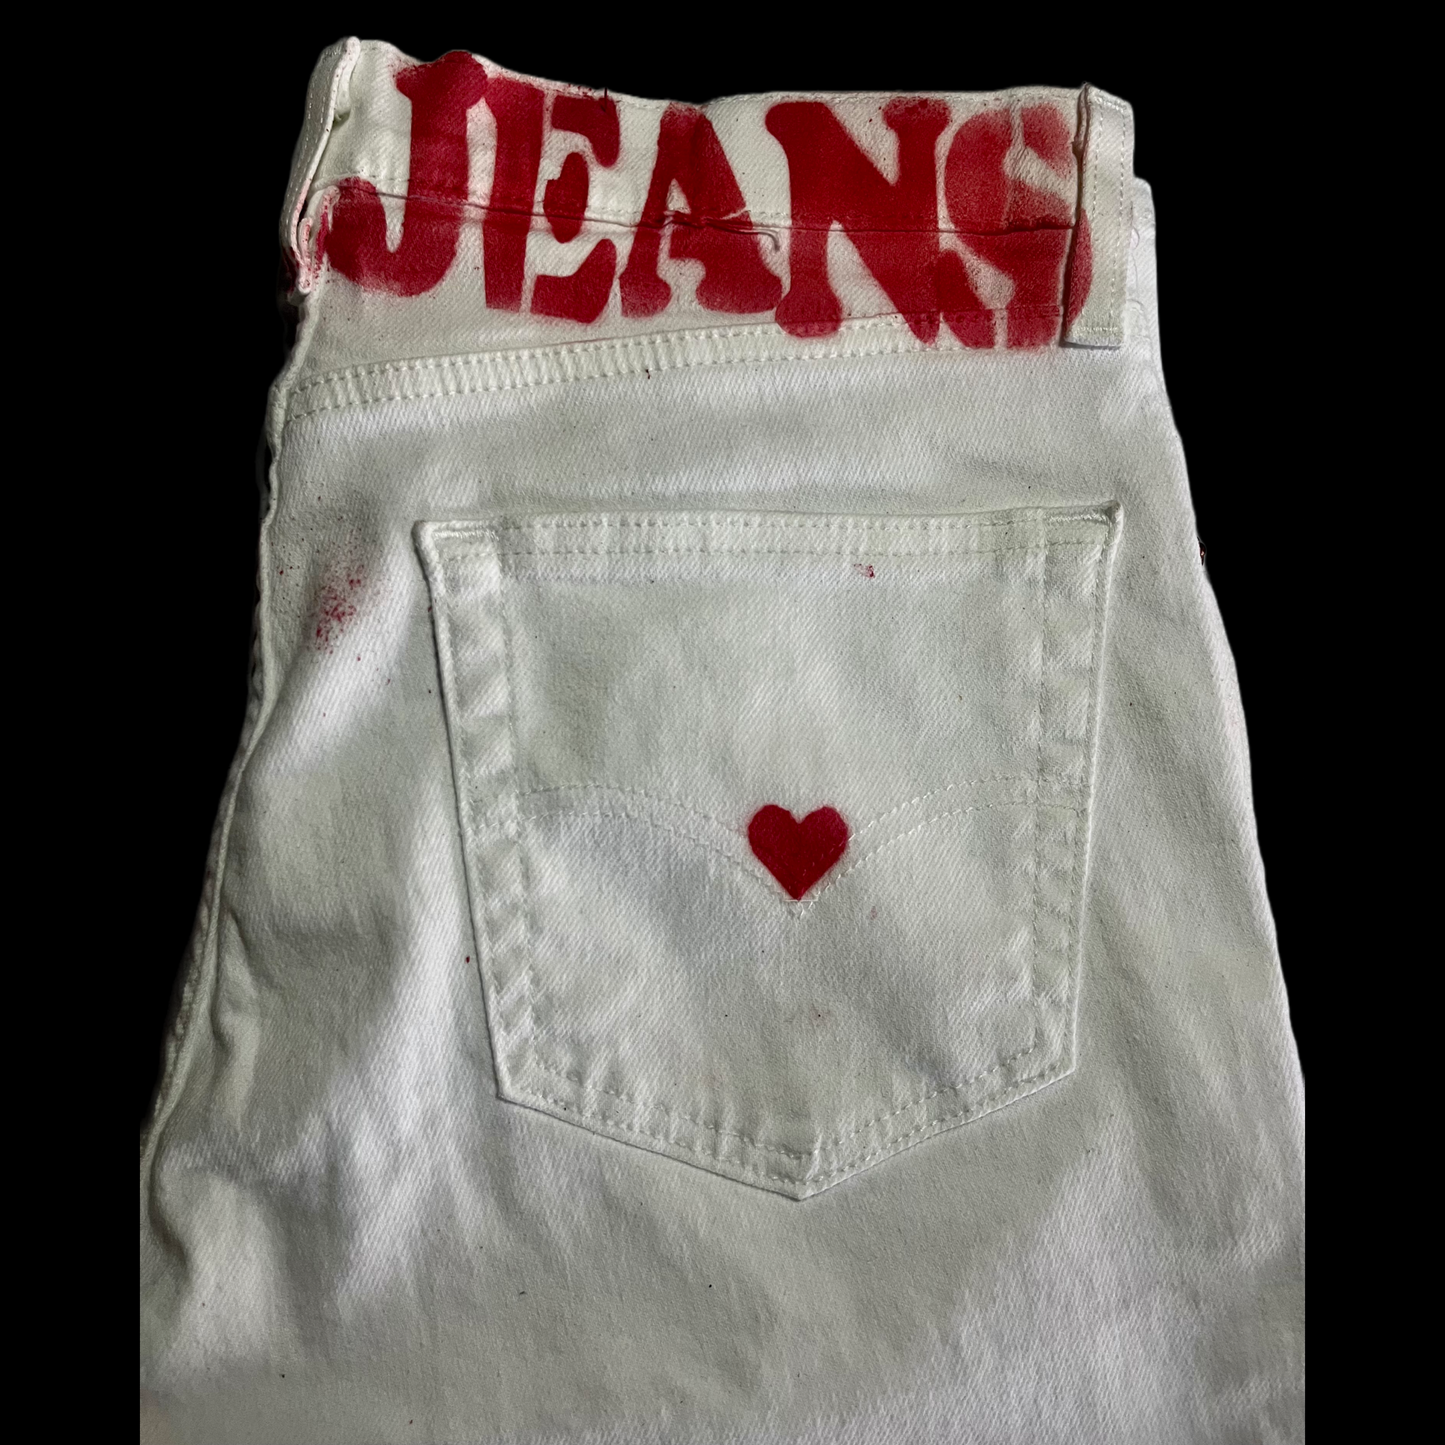 LoveJeans